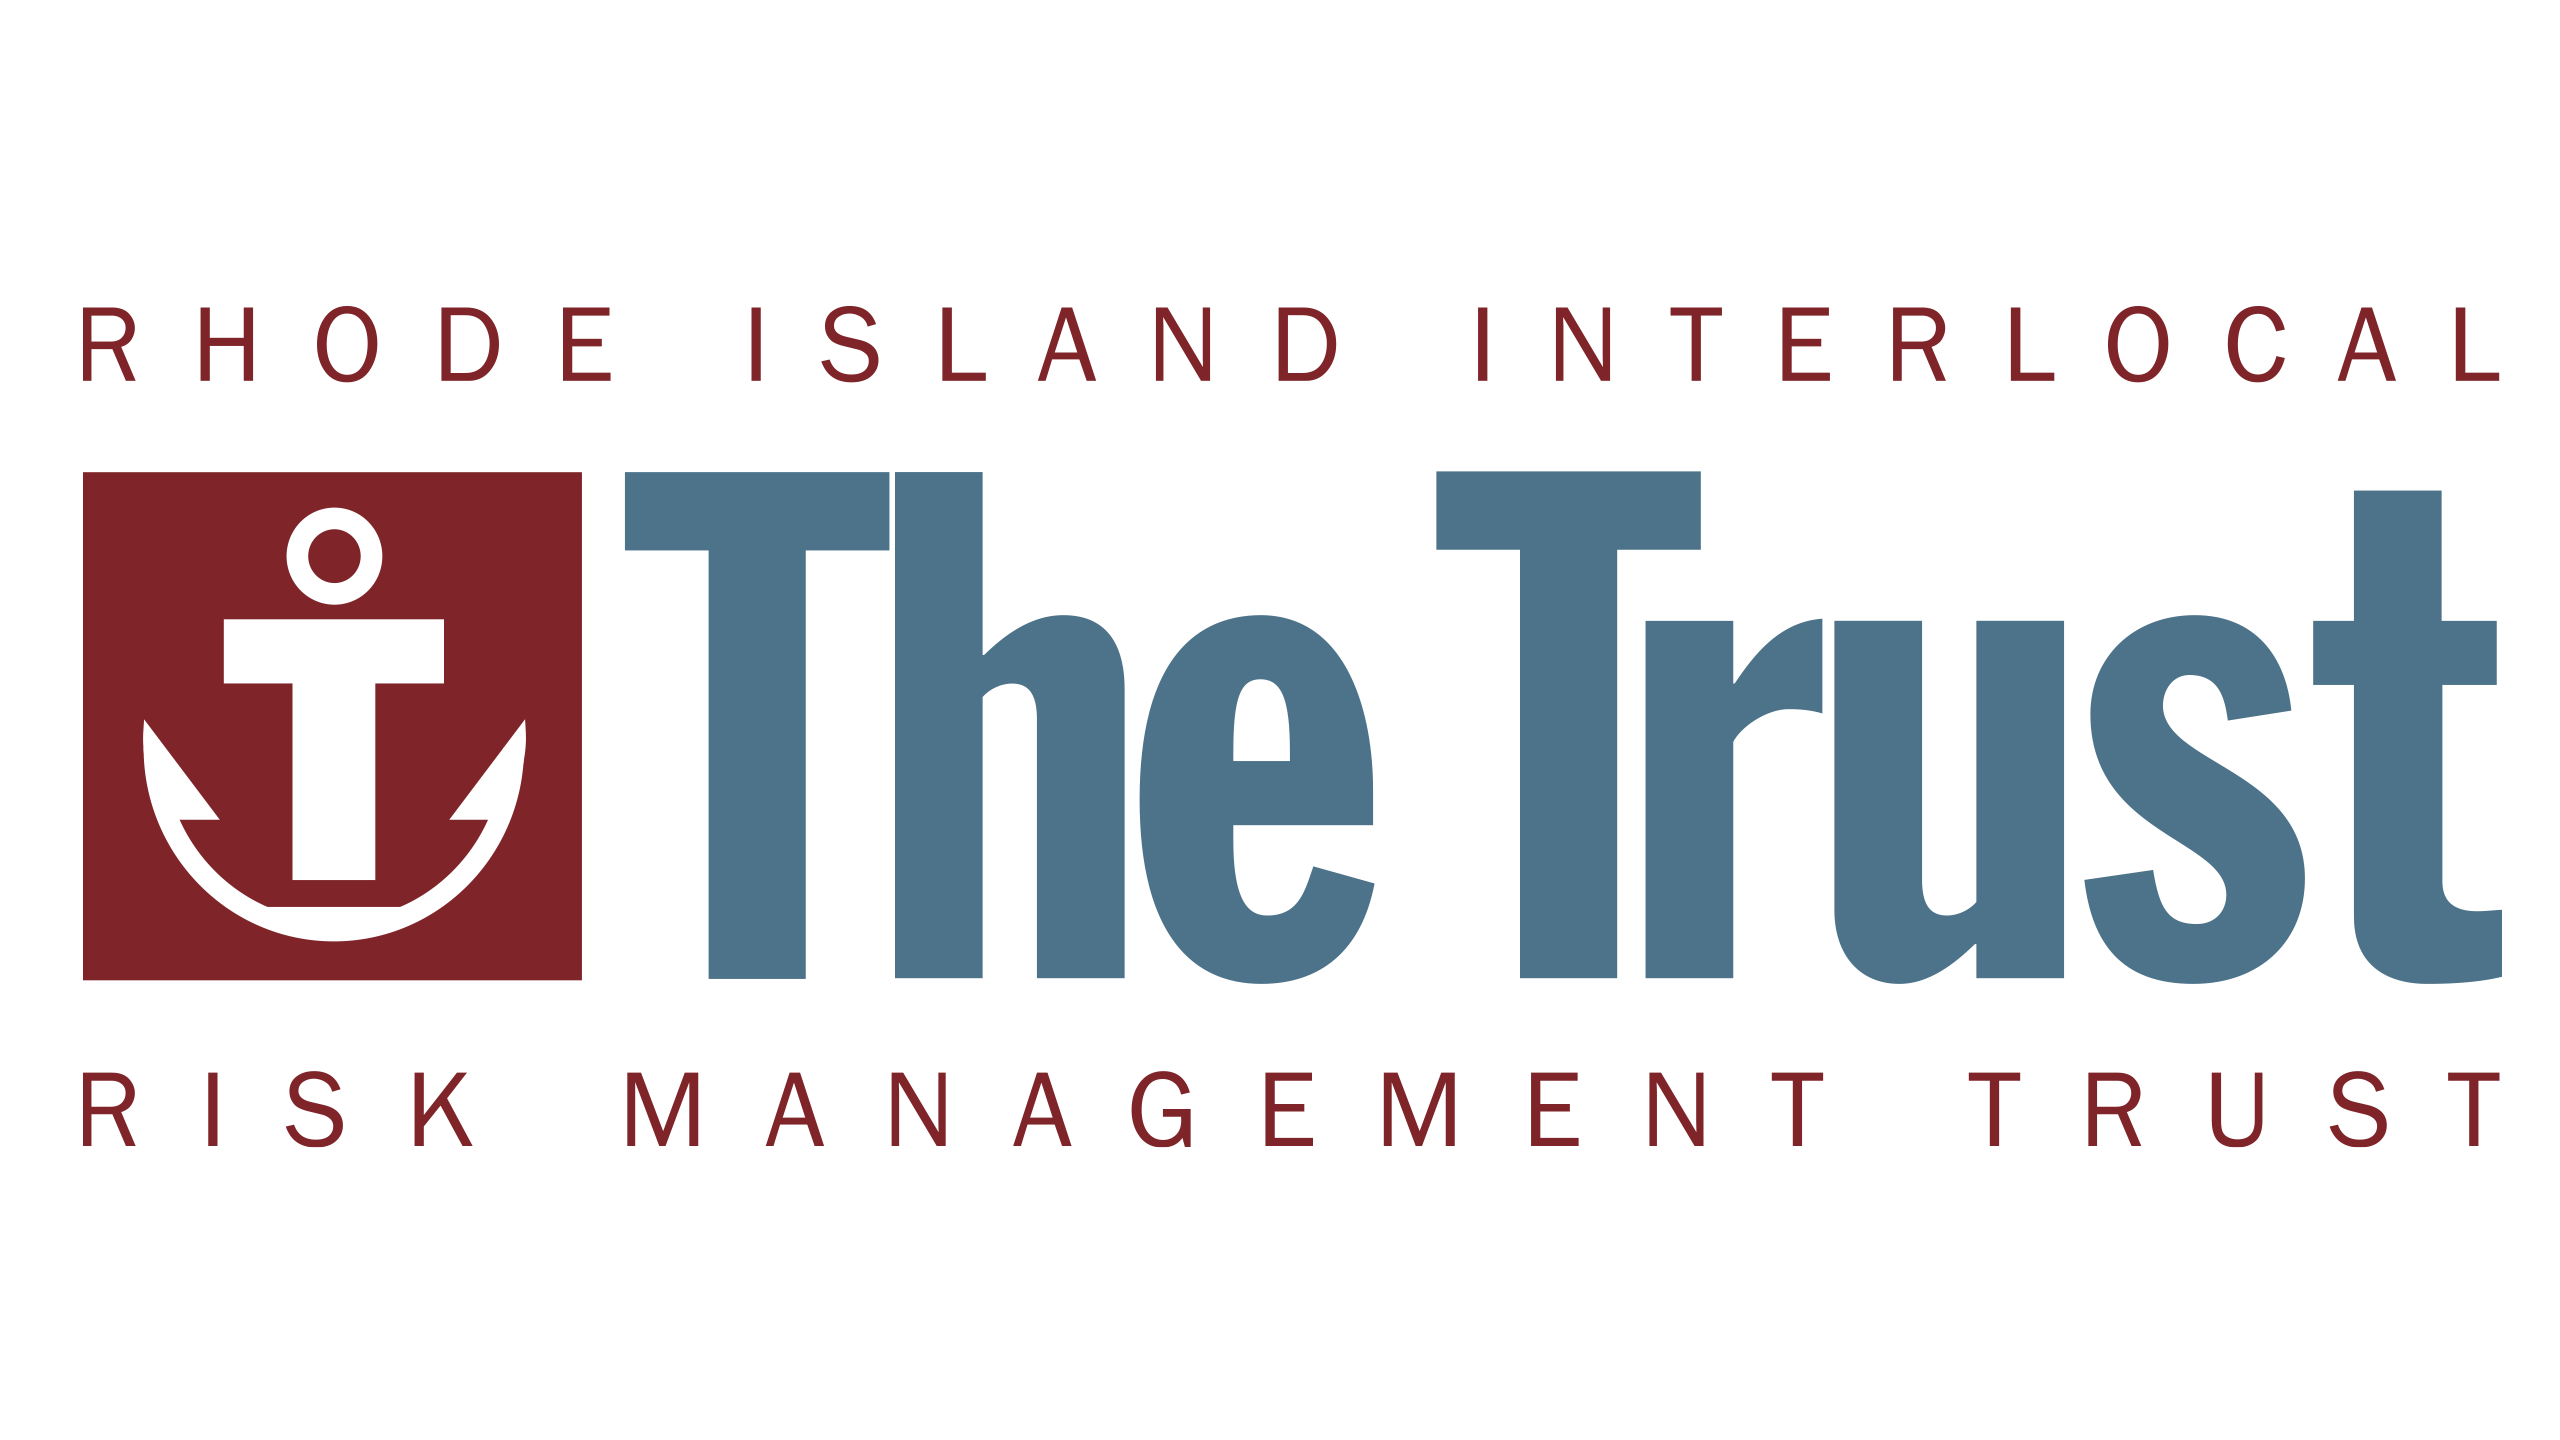 Rhode Island Interlocal Risk Management Trust